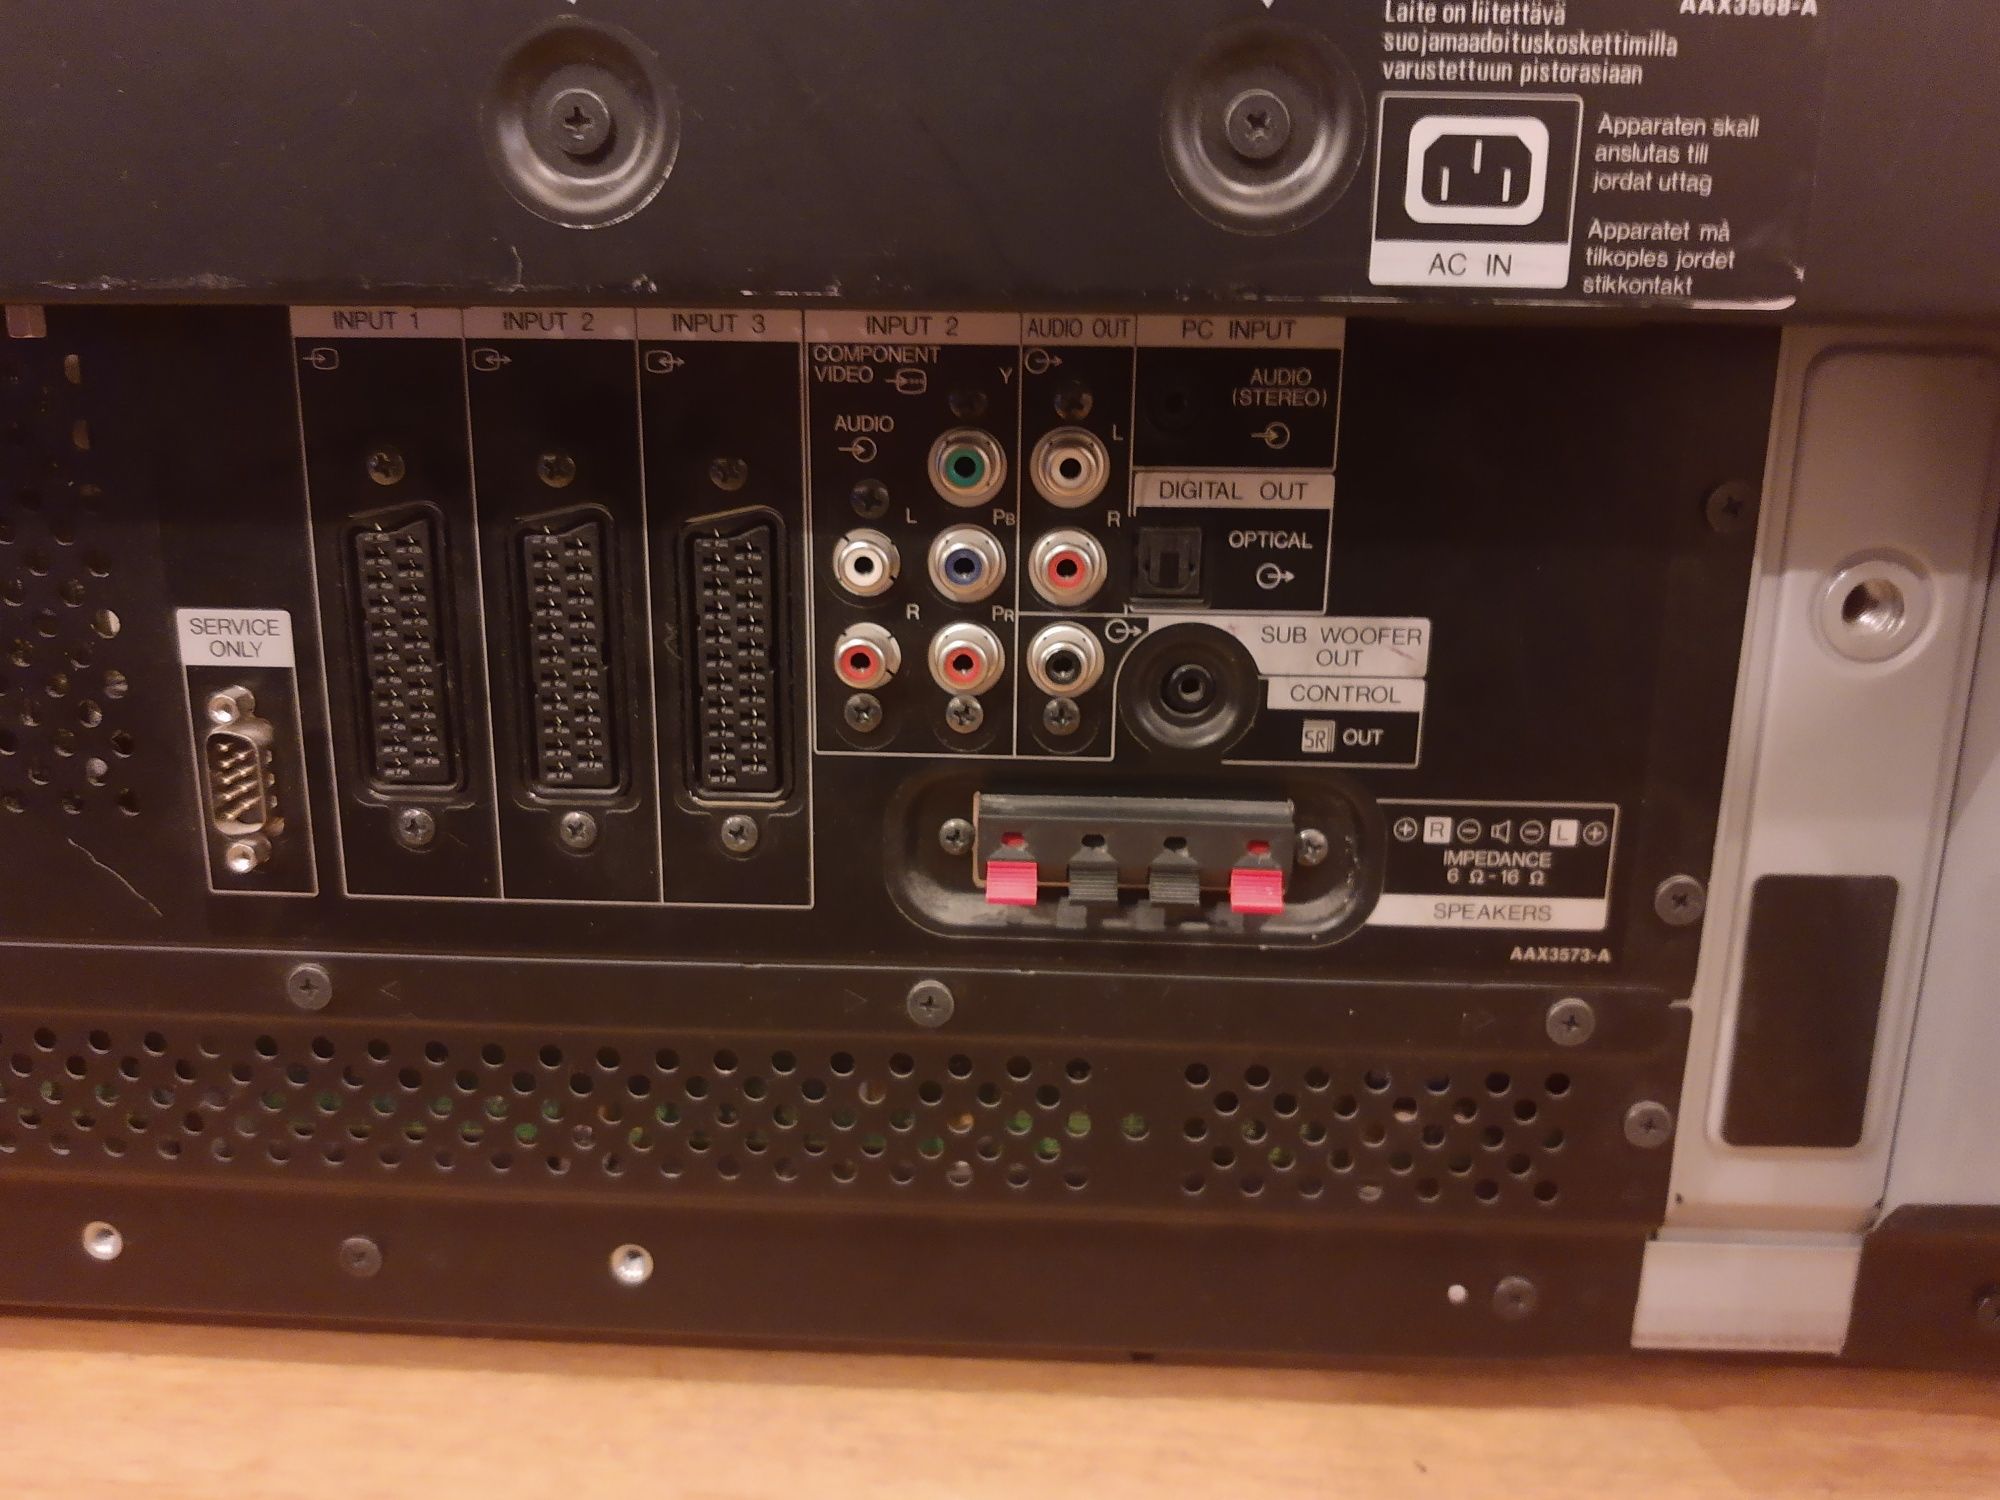 Telewizor plazmowy Pioneer KURO PDP-LX5090